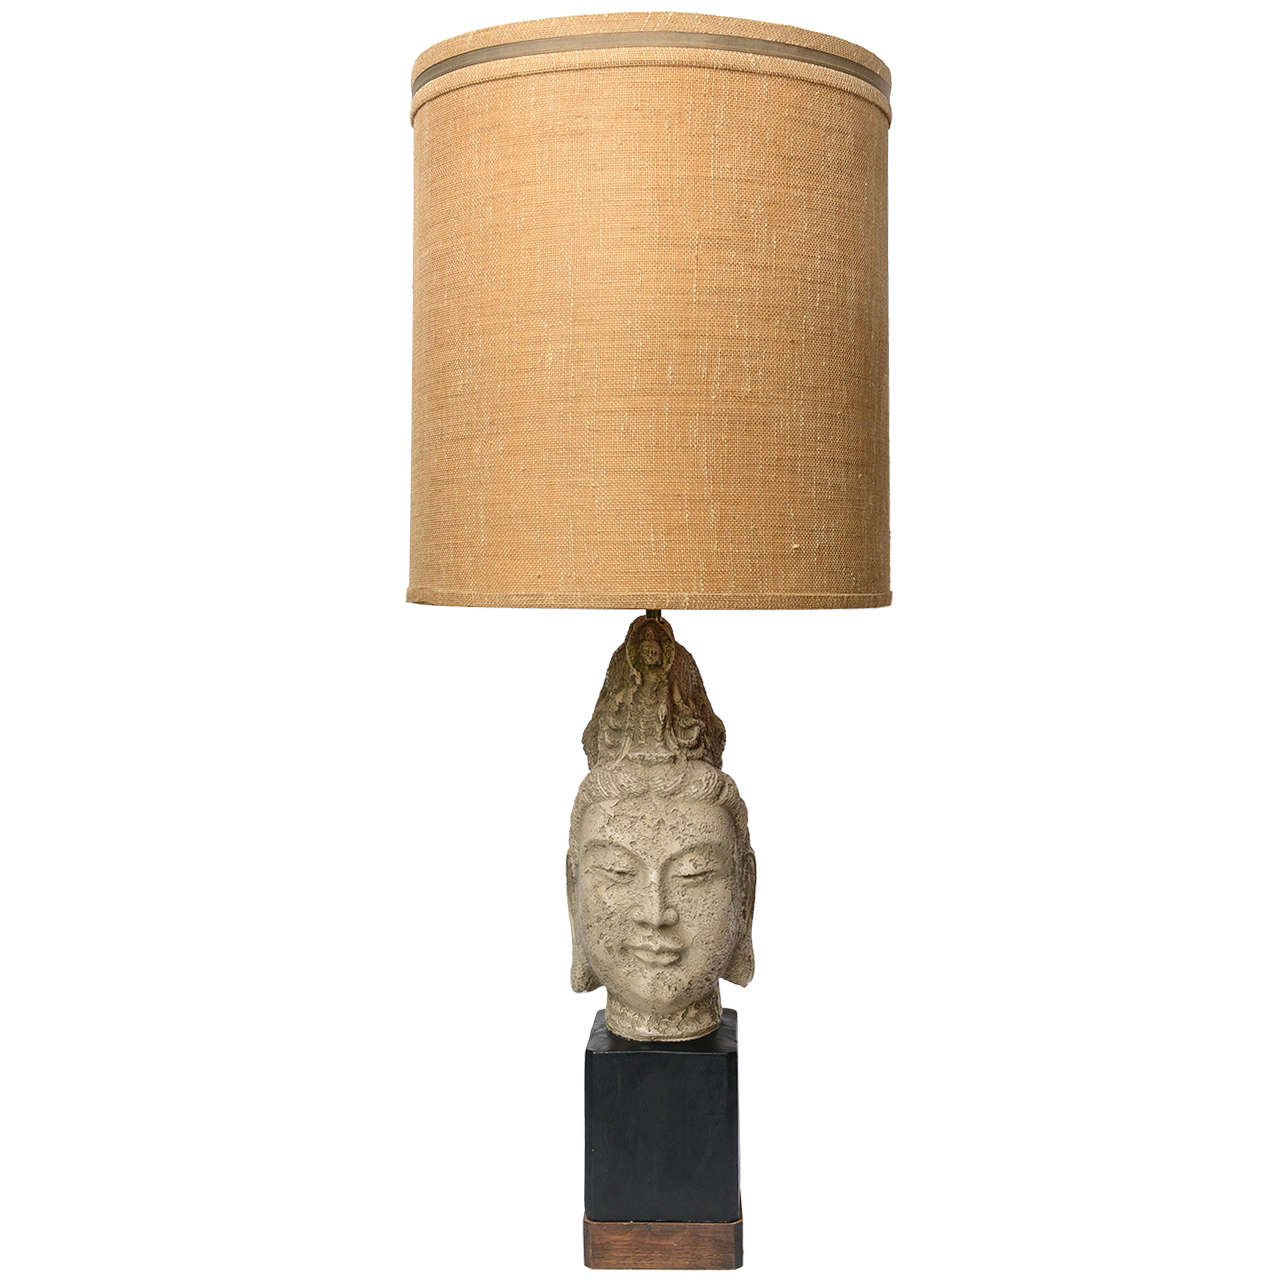 James Mont Buddha Table Lamp